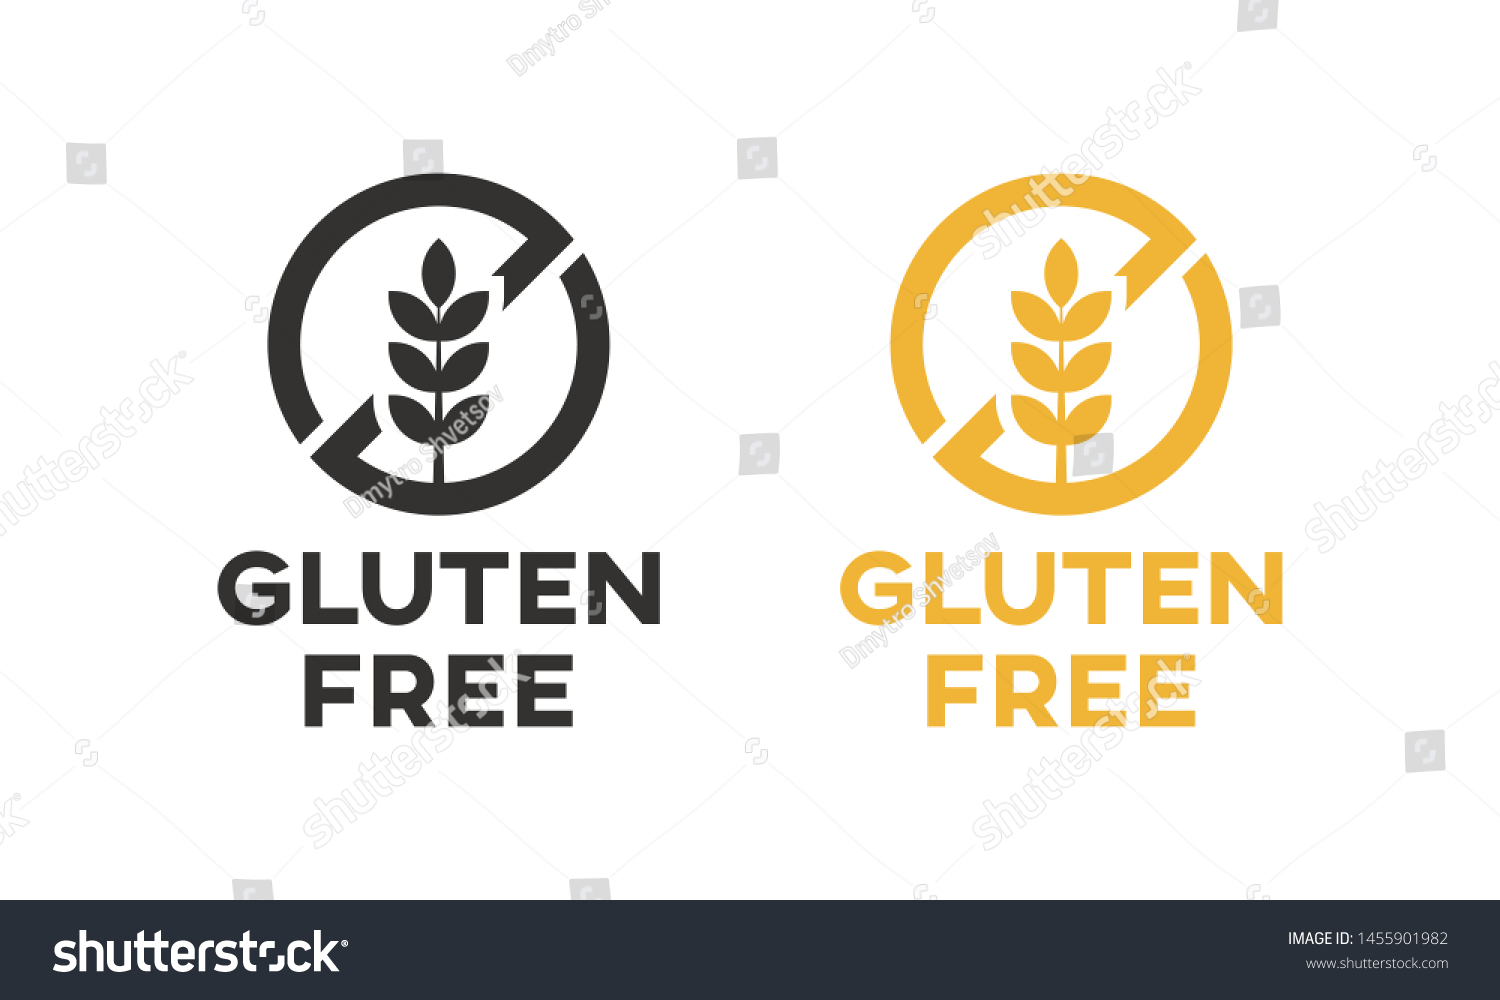 Isolated gluten free icon vector design. #1455901982